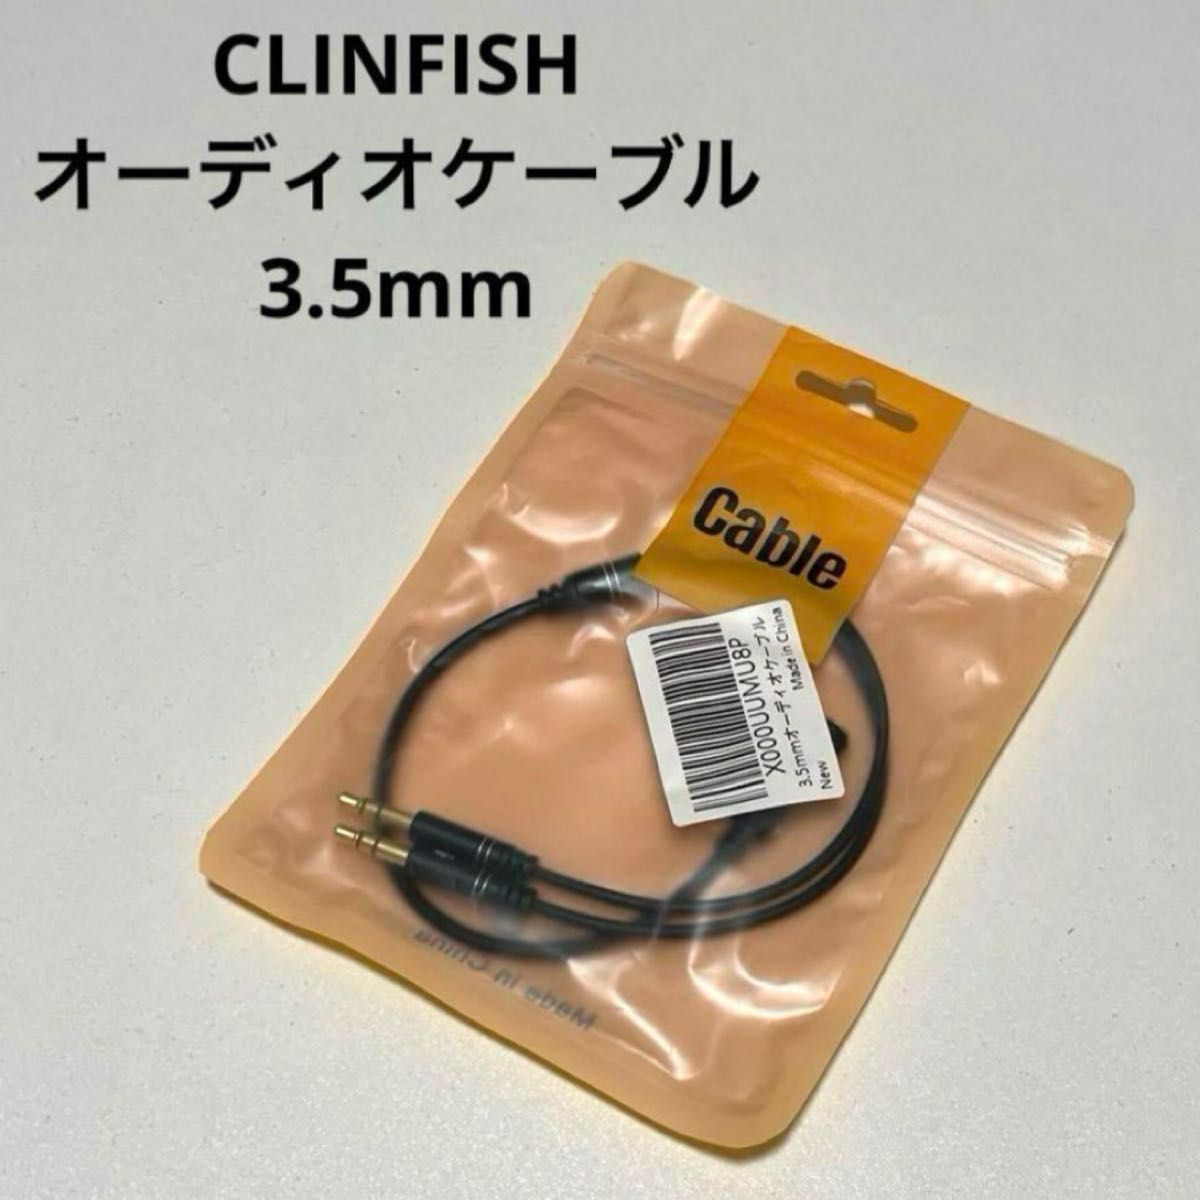 CLINFISH オーディオケーブル 3.5mm パソコン